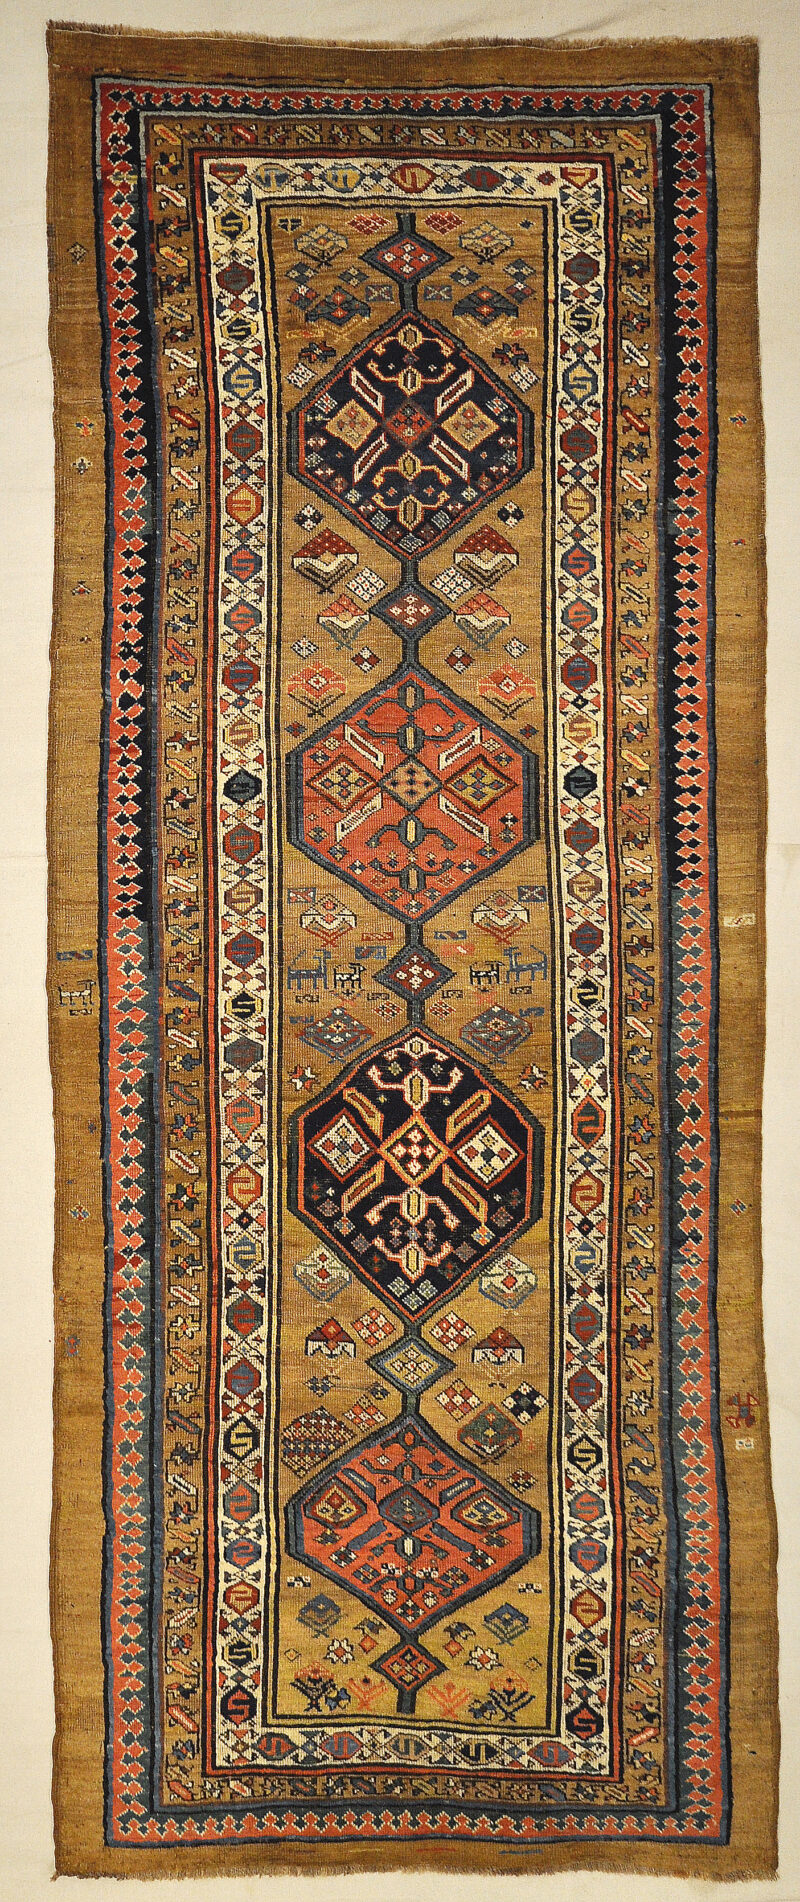 Antique Tribal Persian Camelhair Sarab Genuine Woven Carpet Art Authentic Intricate Santa Barbara Design Center Rugs and More